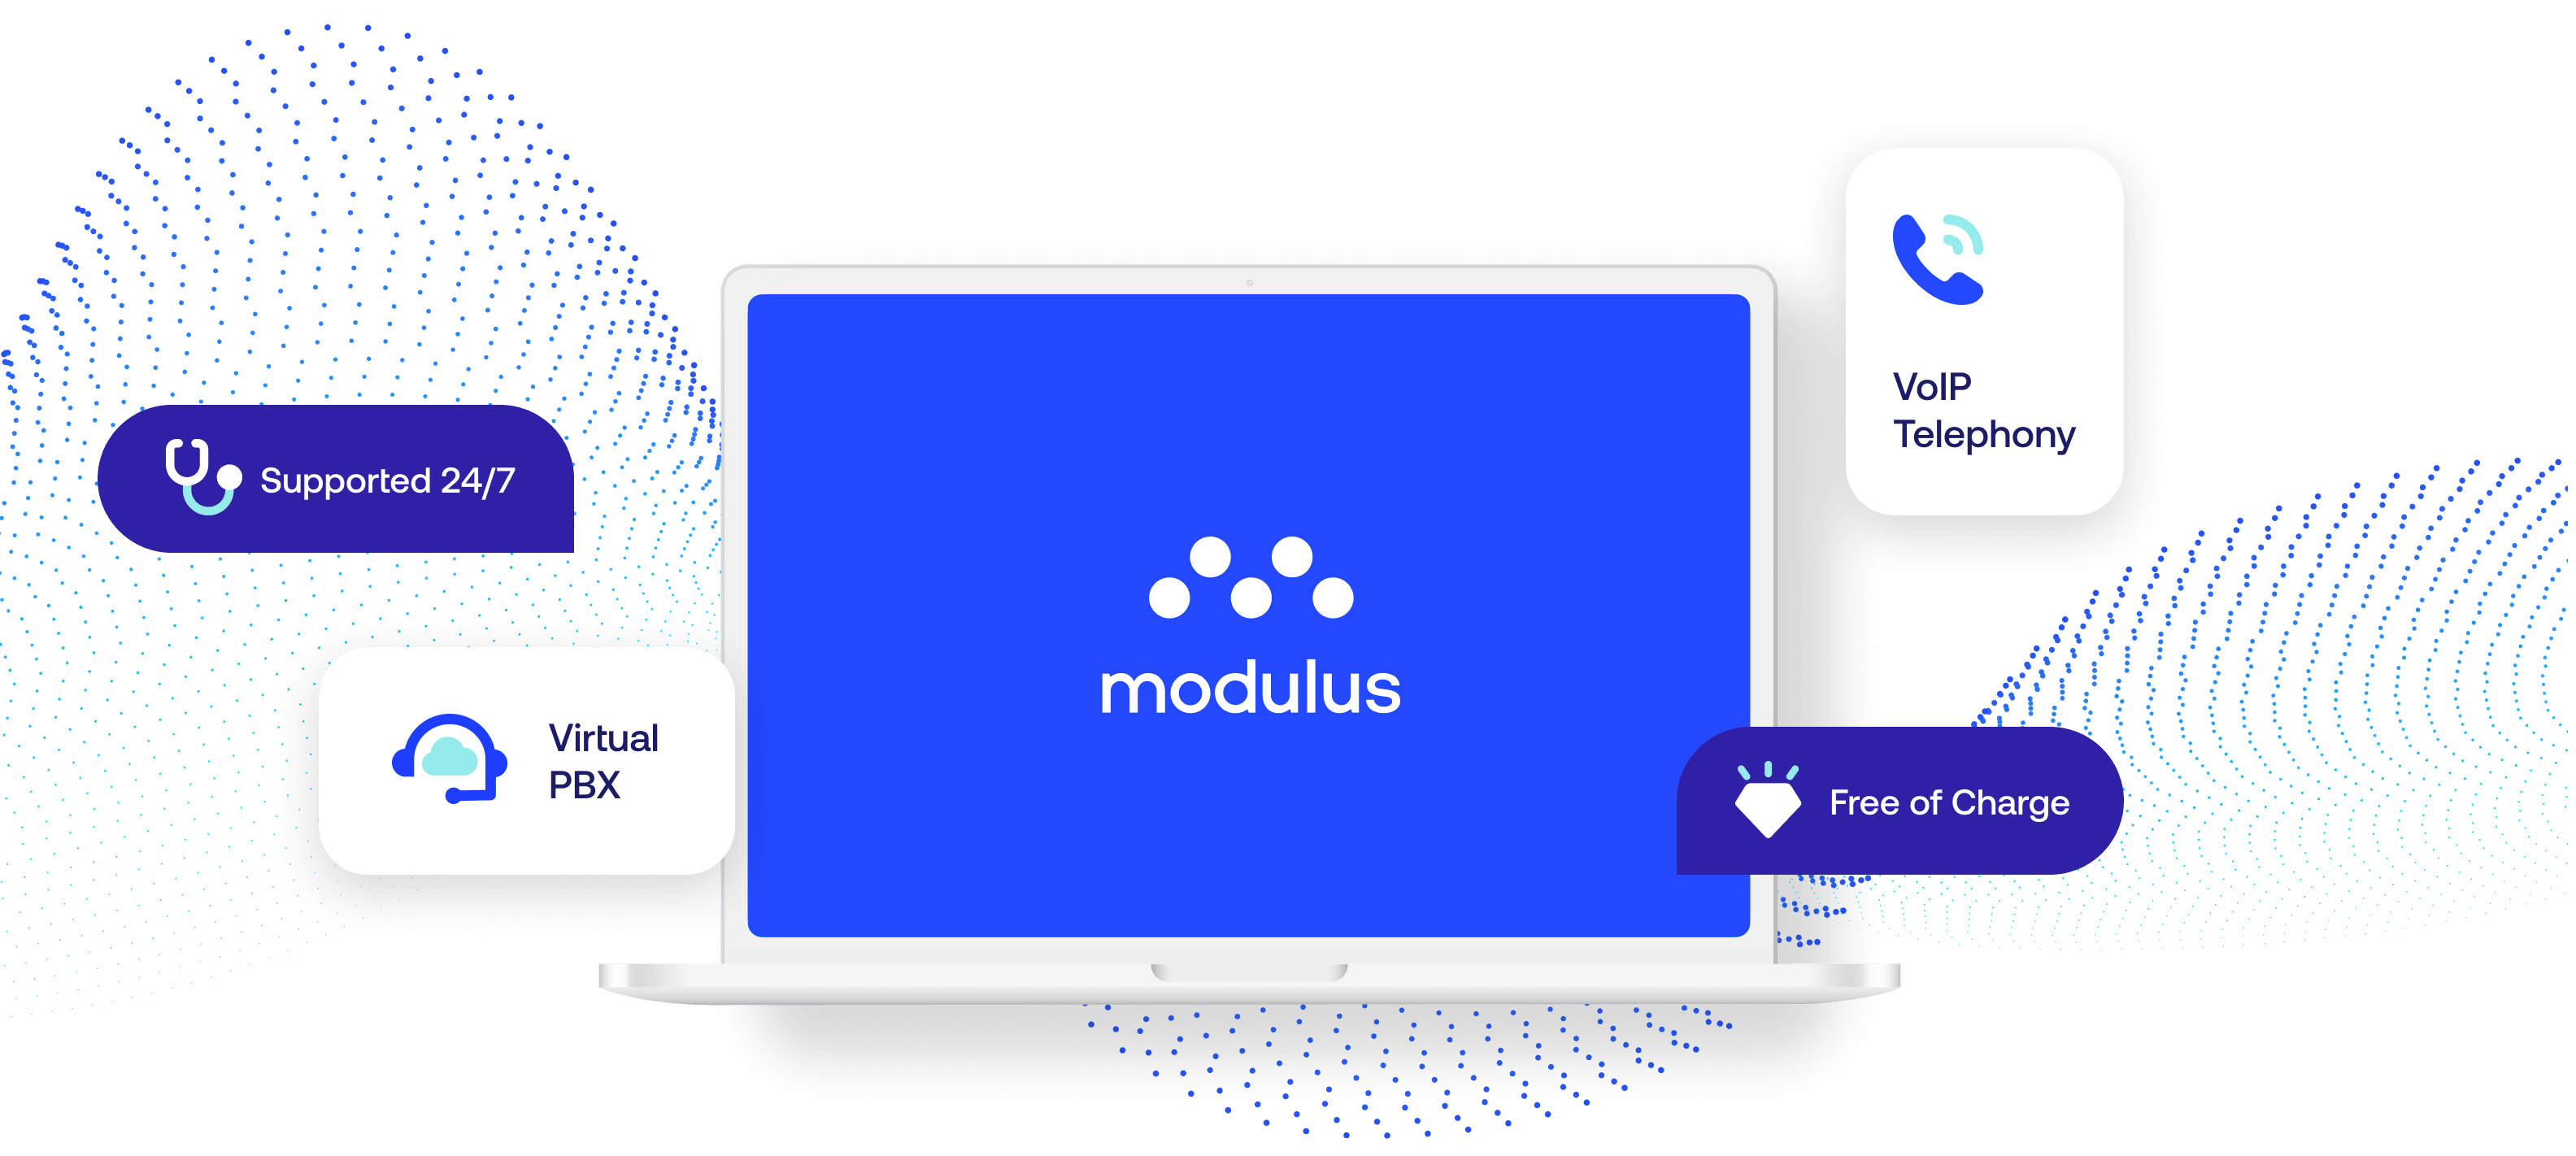 download-modulus-app-for-windows